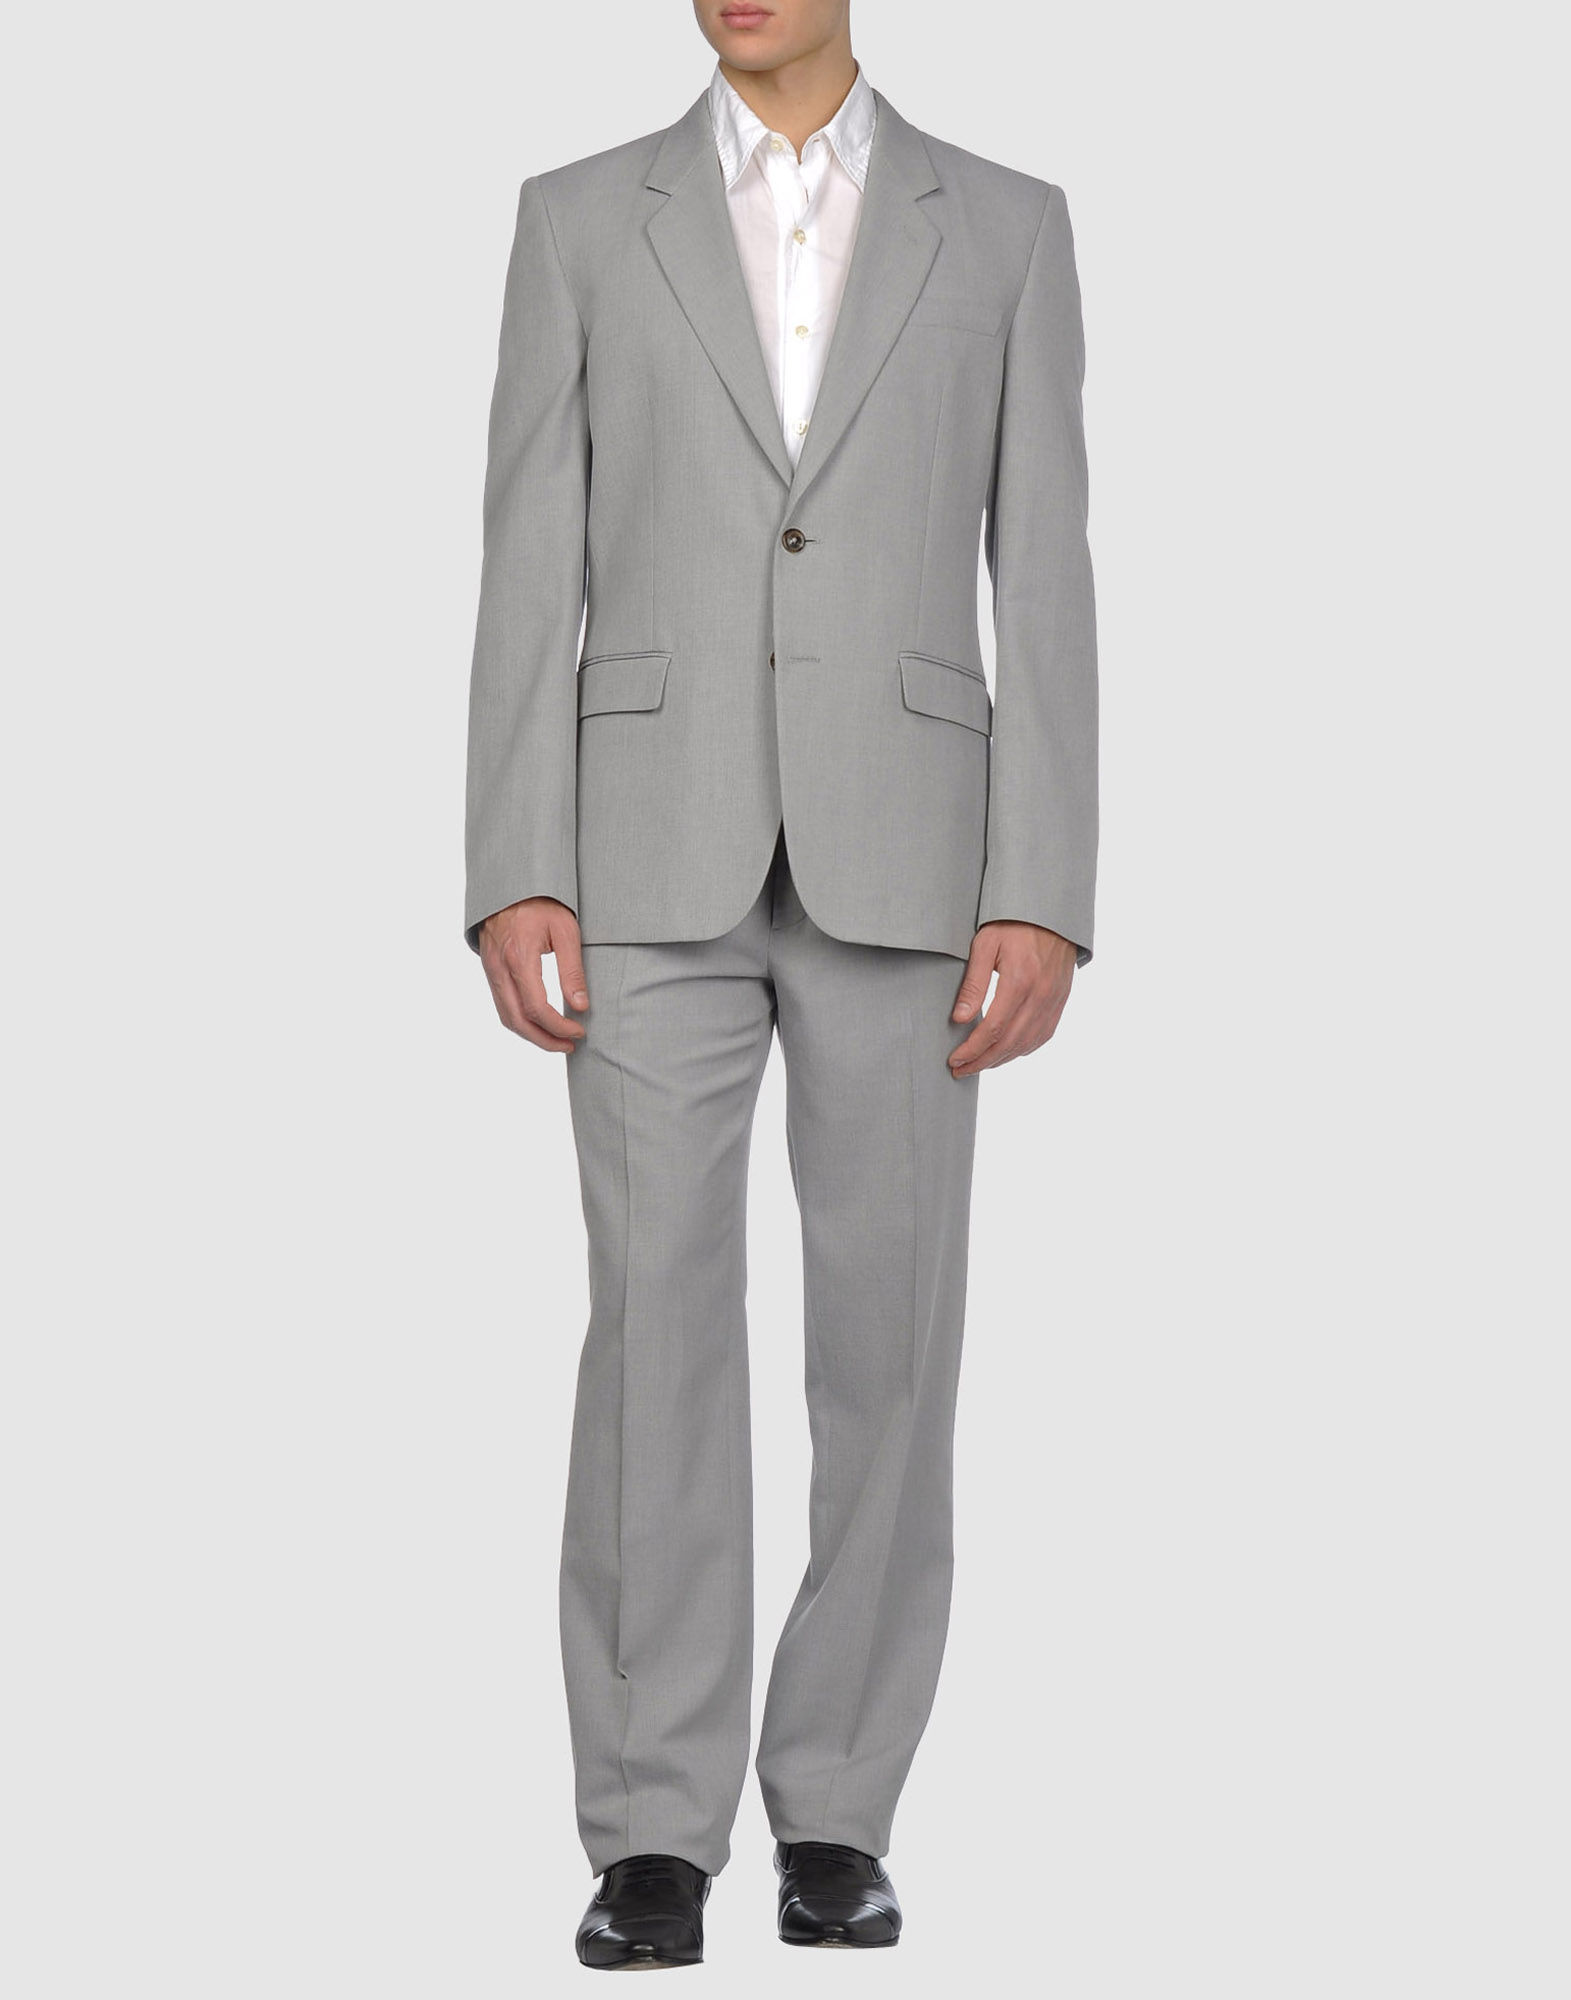 Maison margiela Suit in Gray for Men (grey) | Lyst